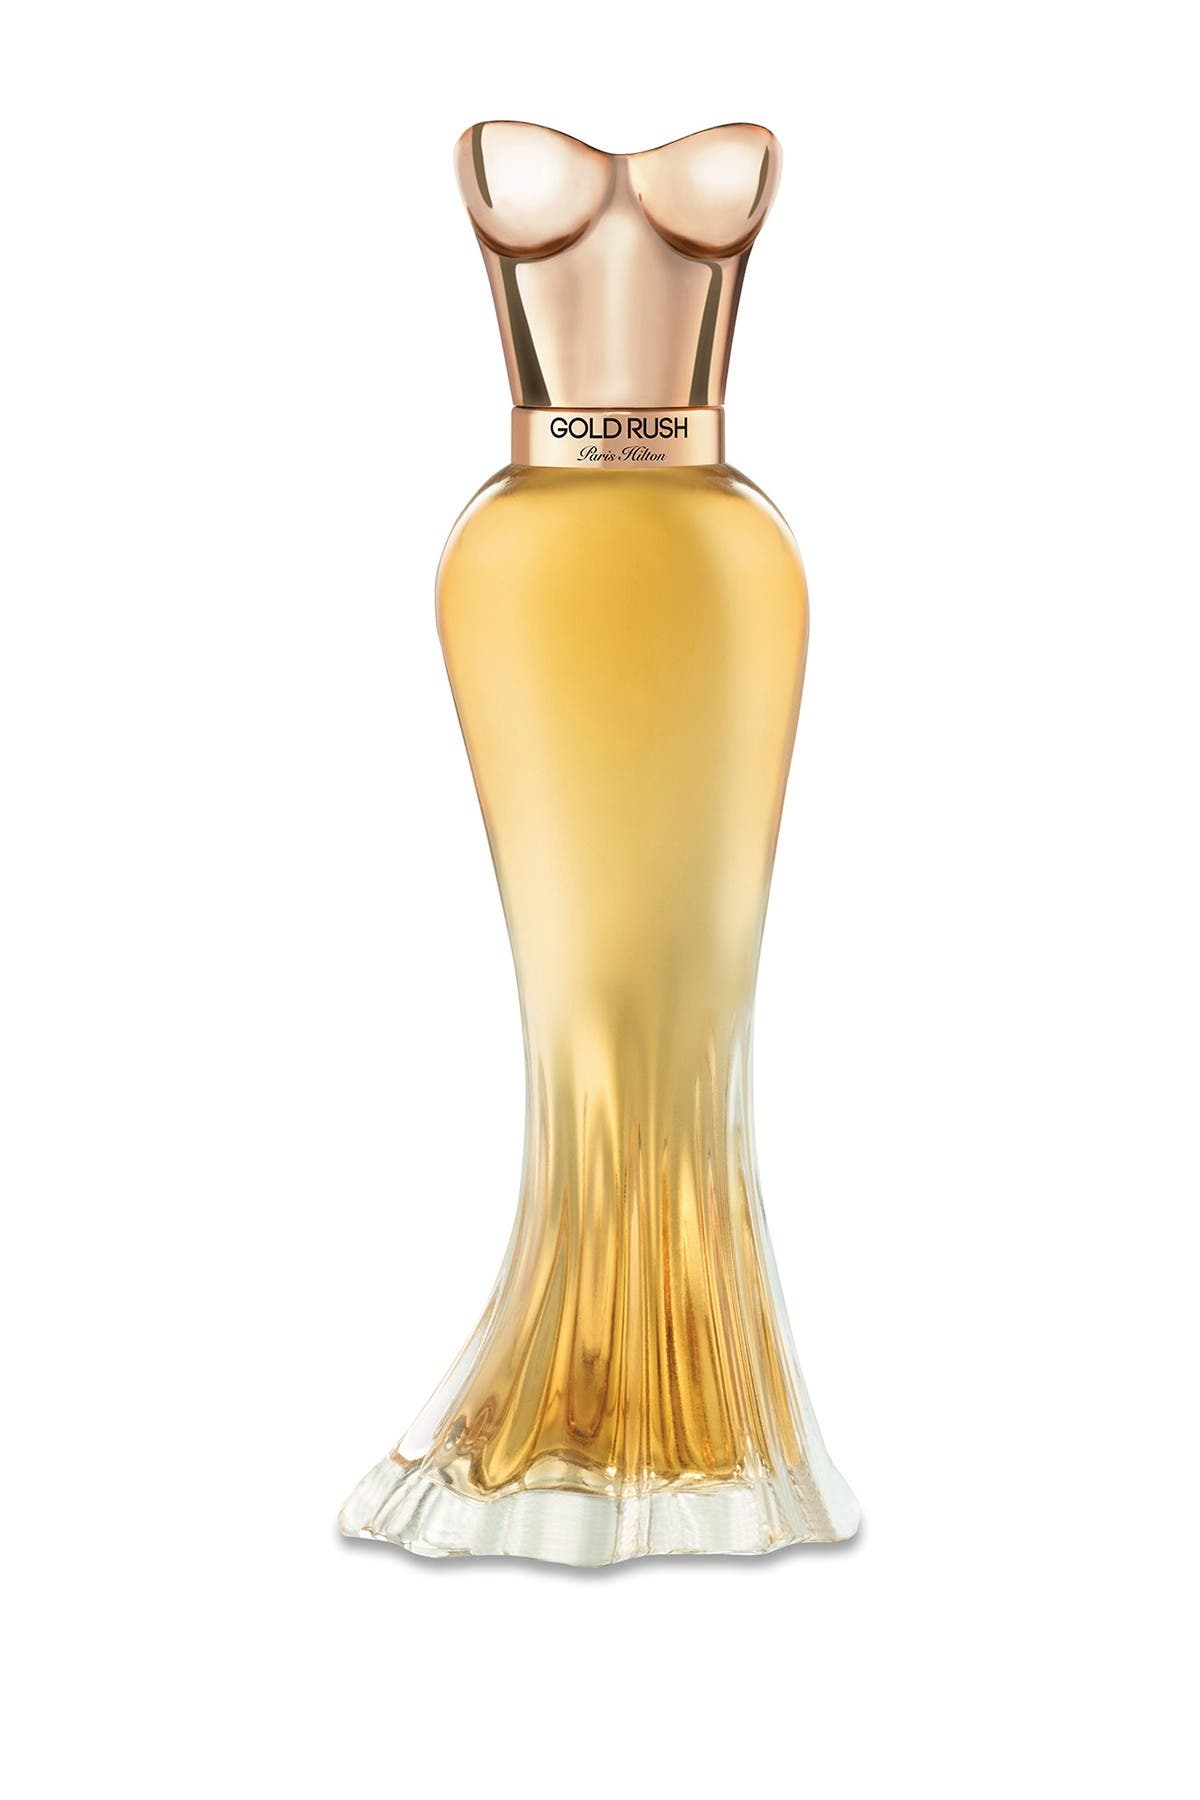 Gold Rush Eau de Parfum Spray - 3.4 fl. oz. Paris Hilton